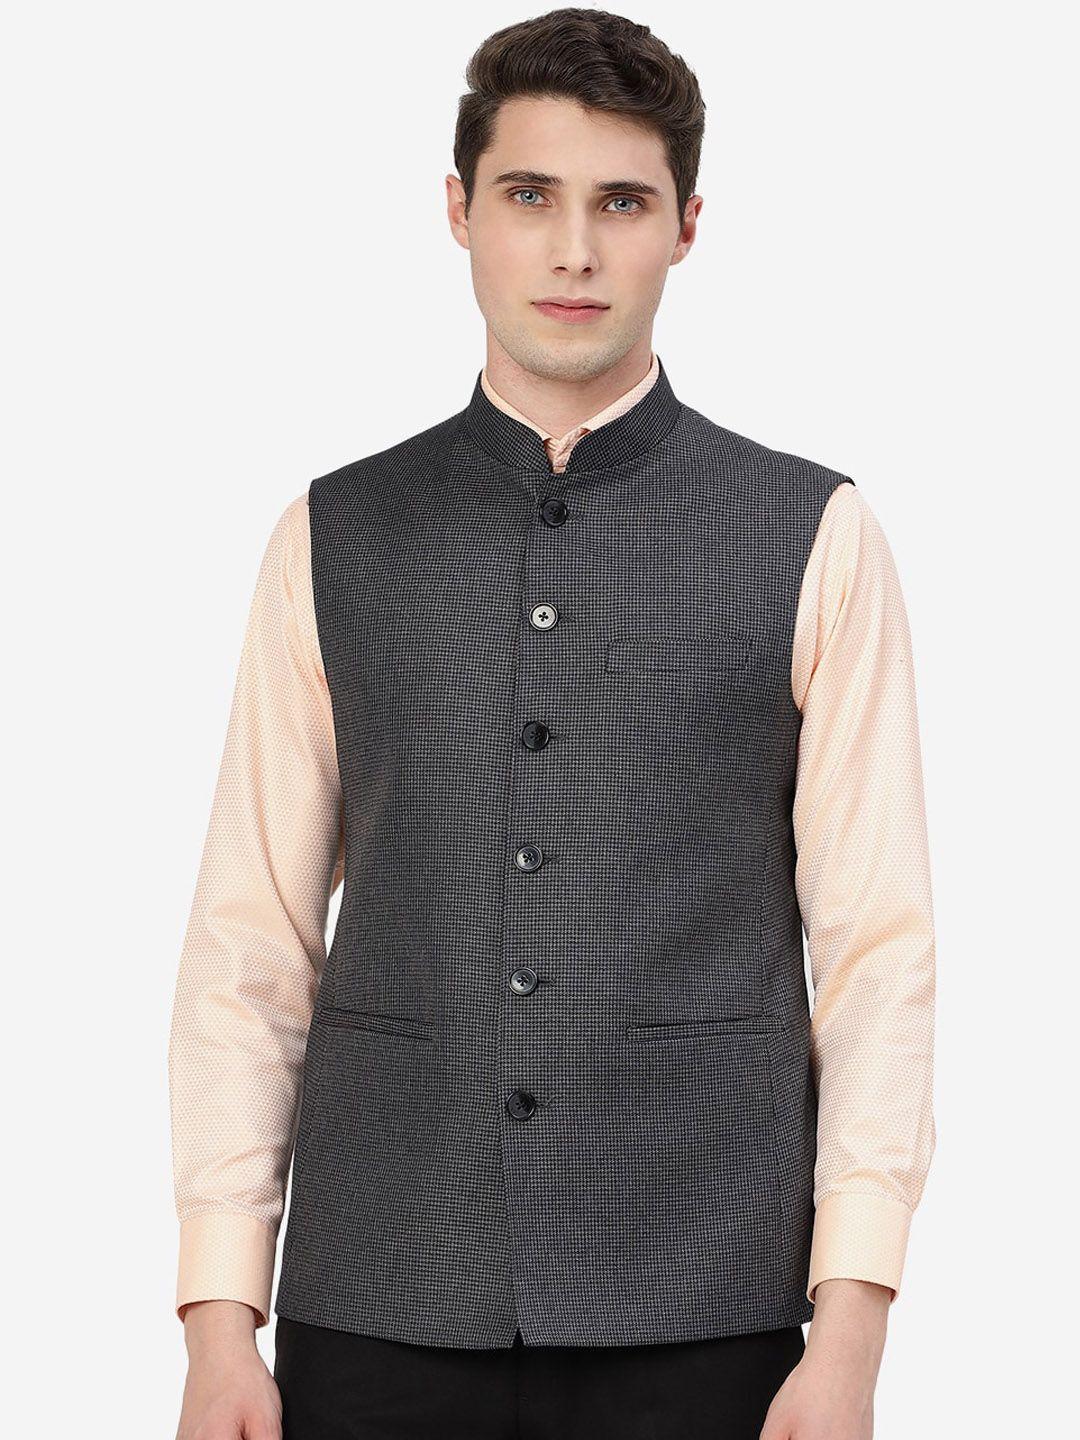 modi-jacket-men-textured-terry-wool-nehru-jacket